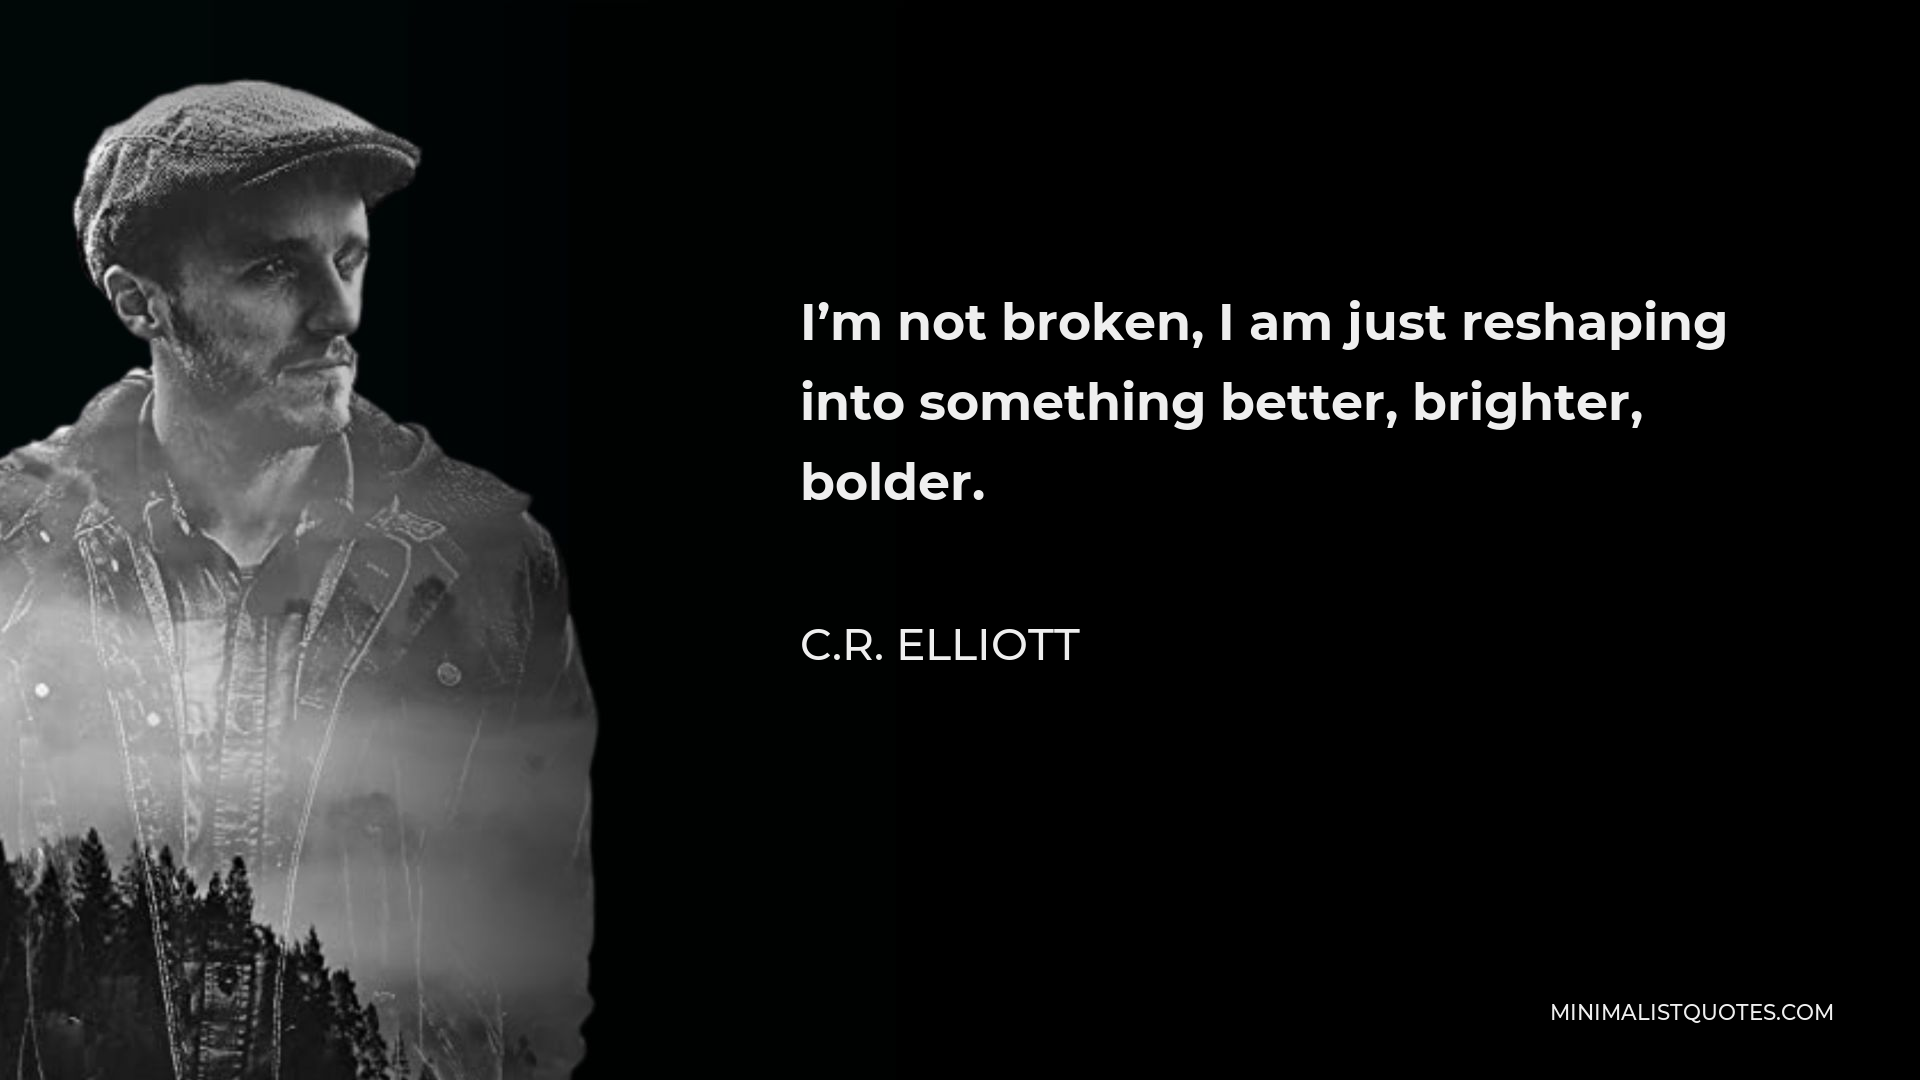 C.R. Elliott Quote - I’m not broken, I am just reshaping into something better, brighter, bolder.